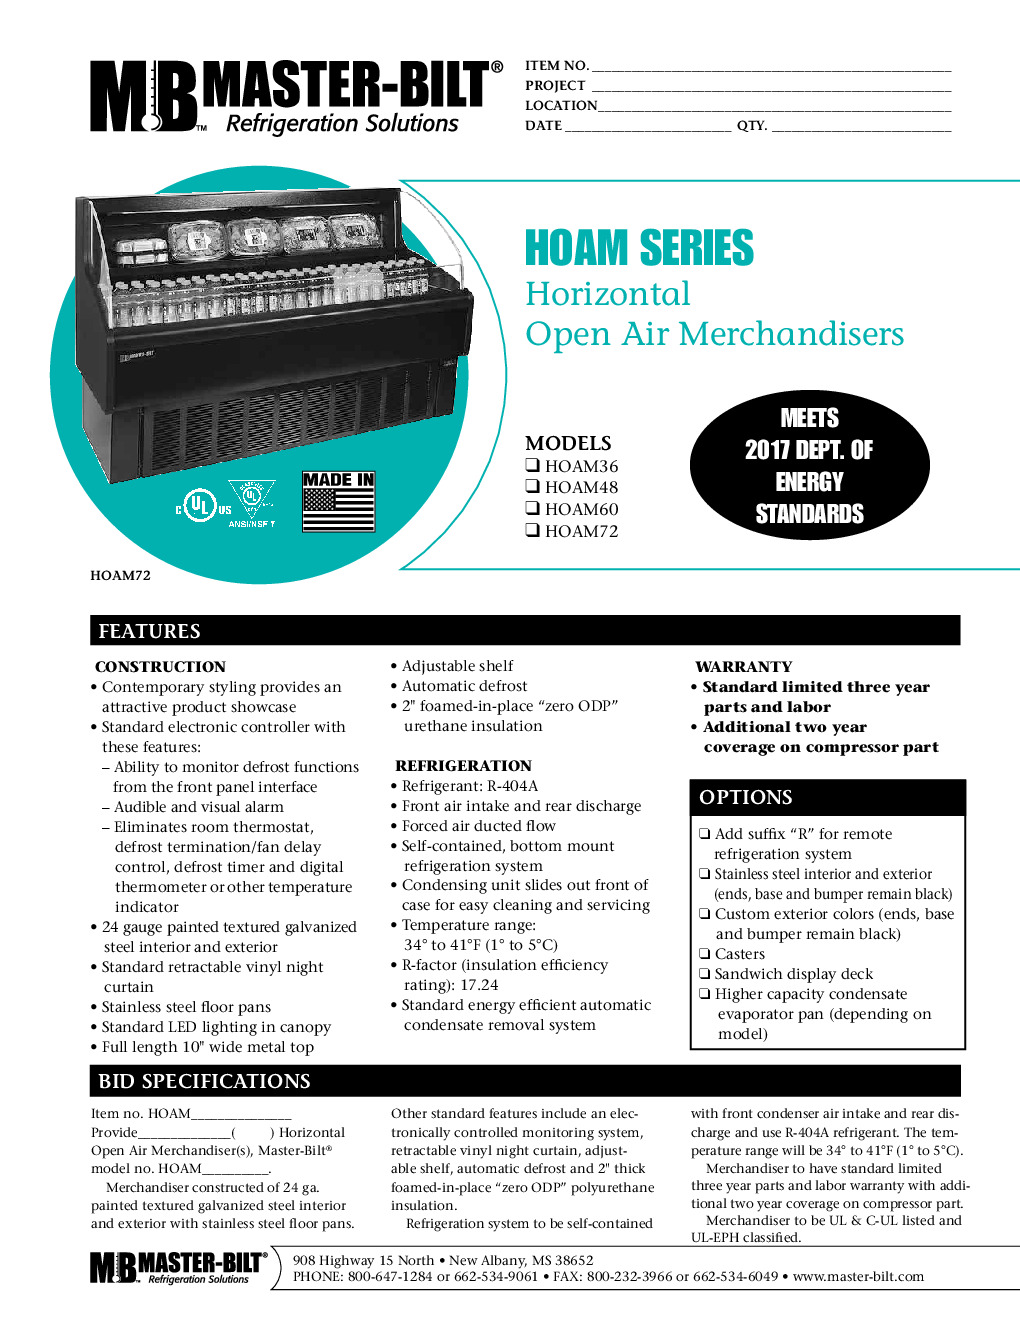 Master-Bilt HOAM72 Open Refrigerated Display Merchandiser